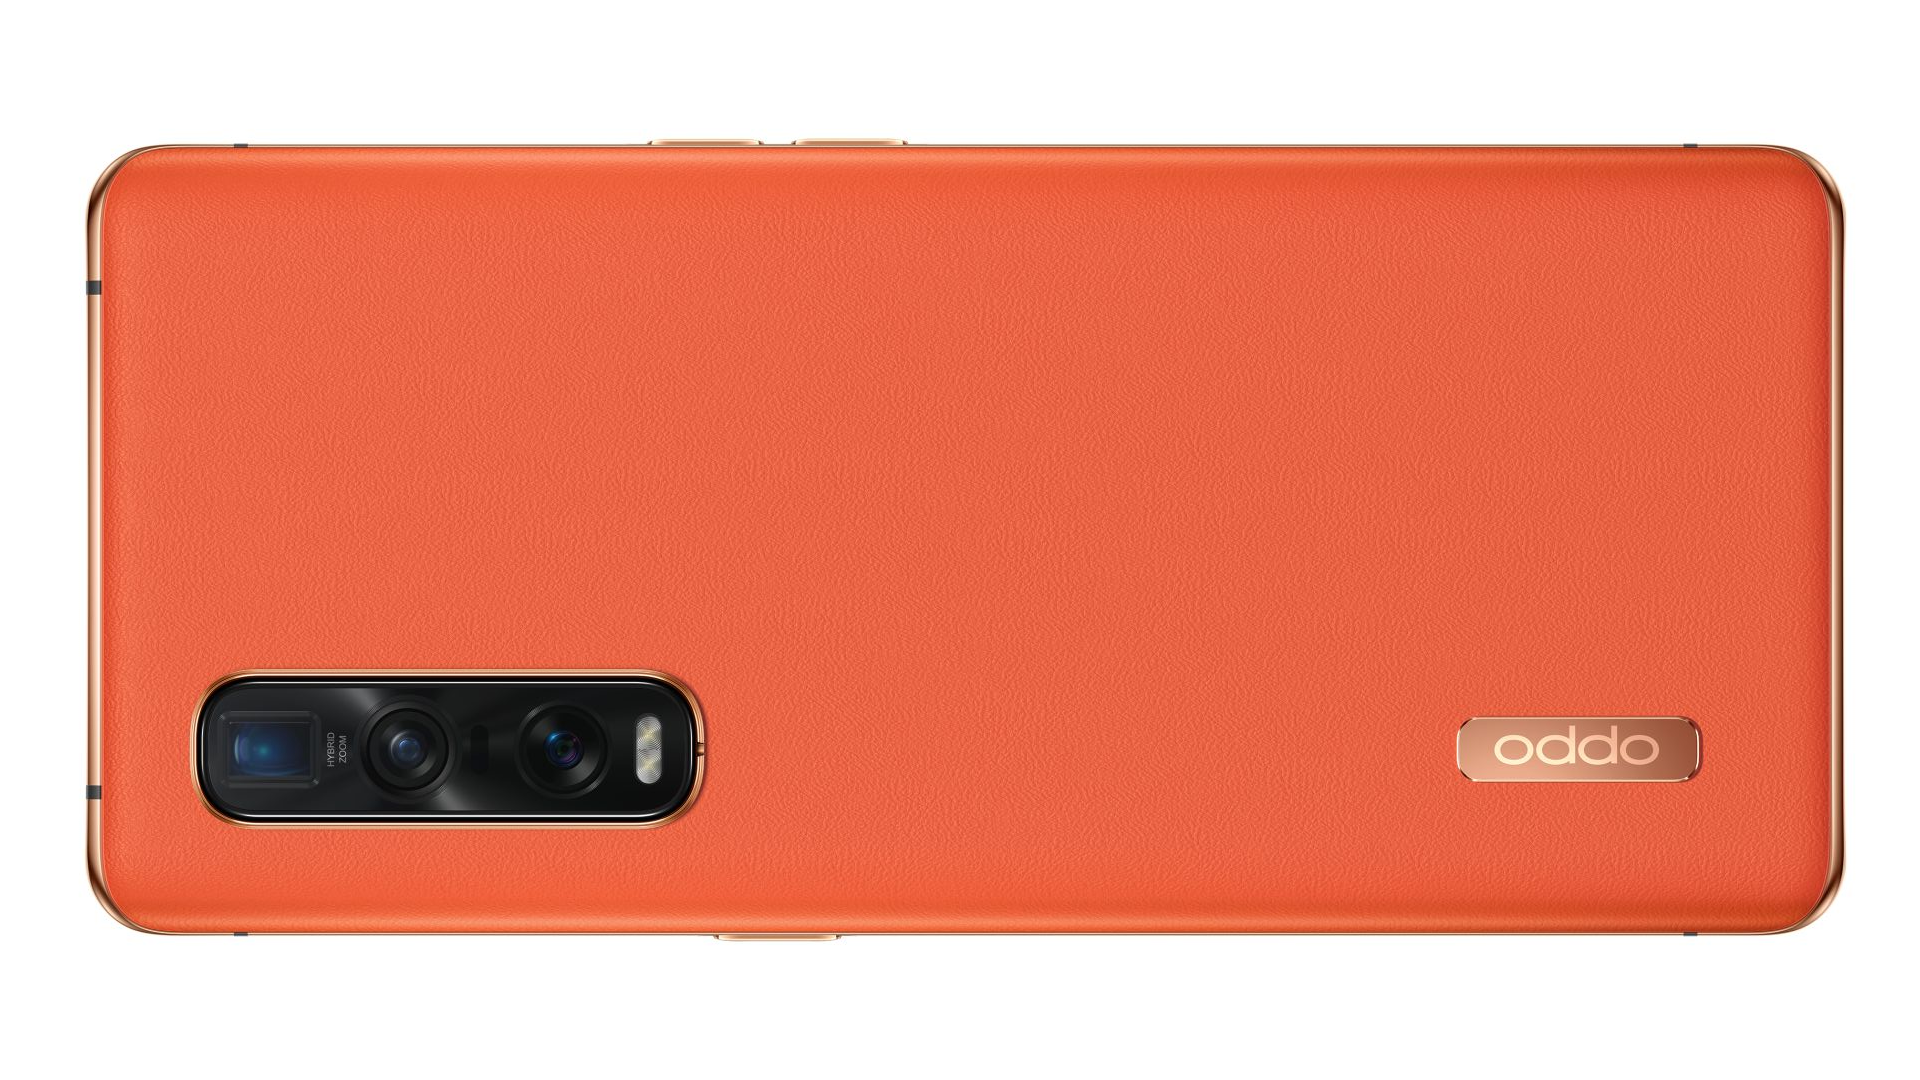 Gambar casing Oppo Find X2 berwarna oranye